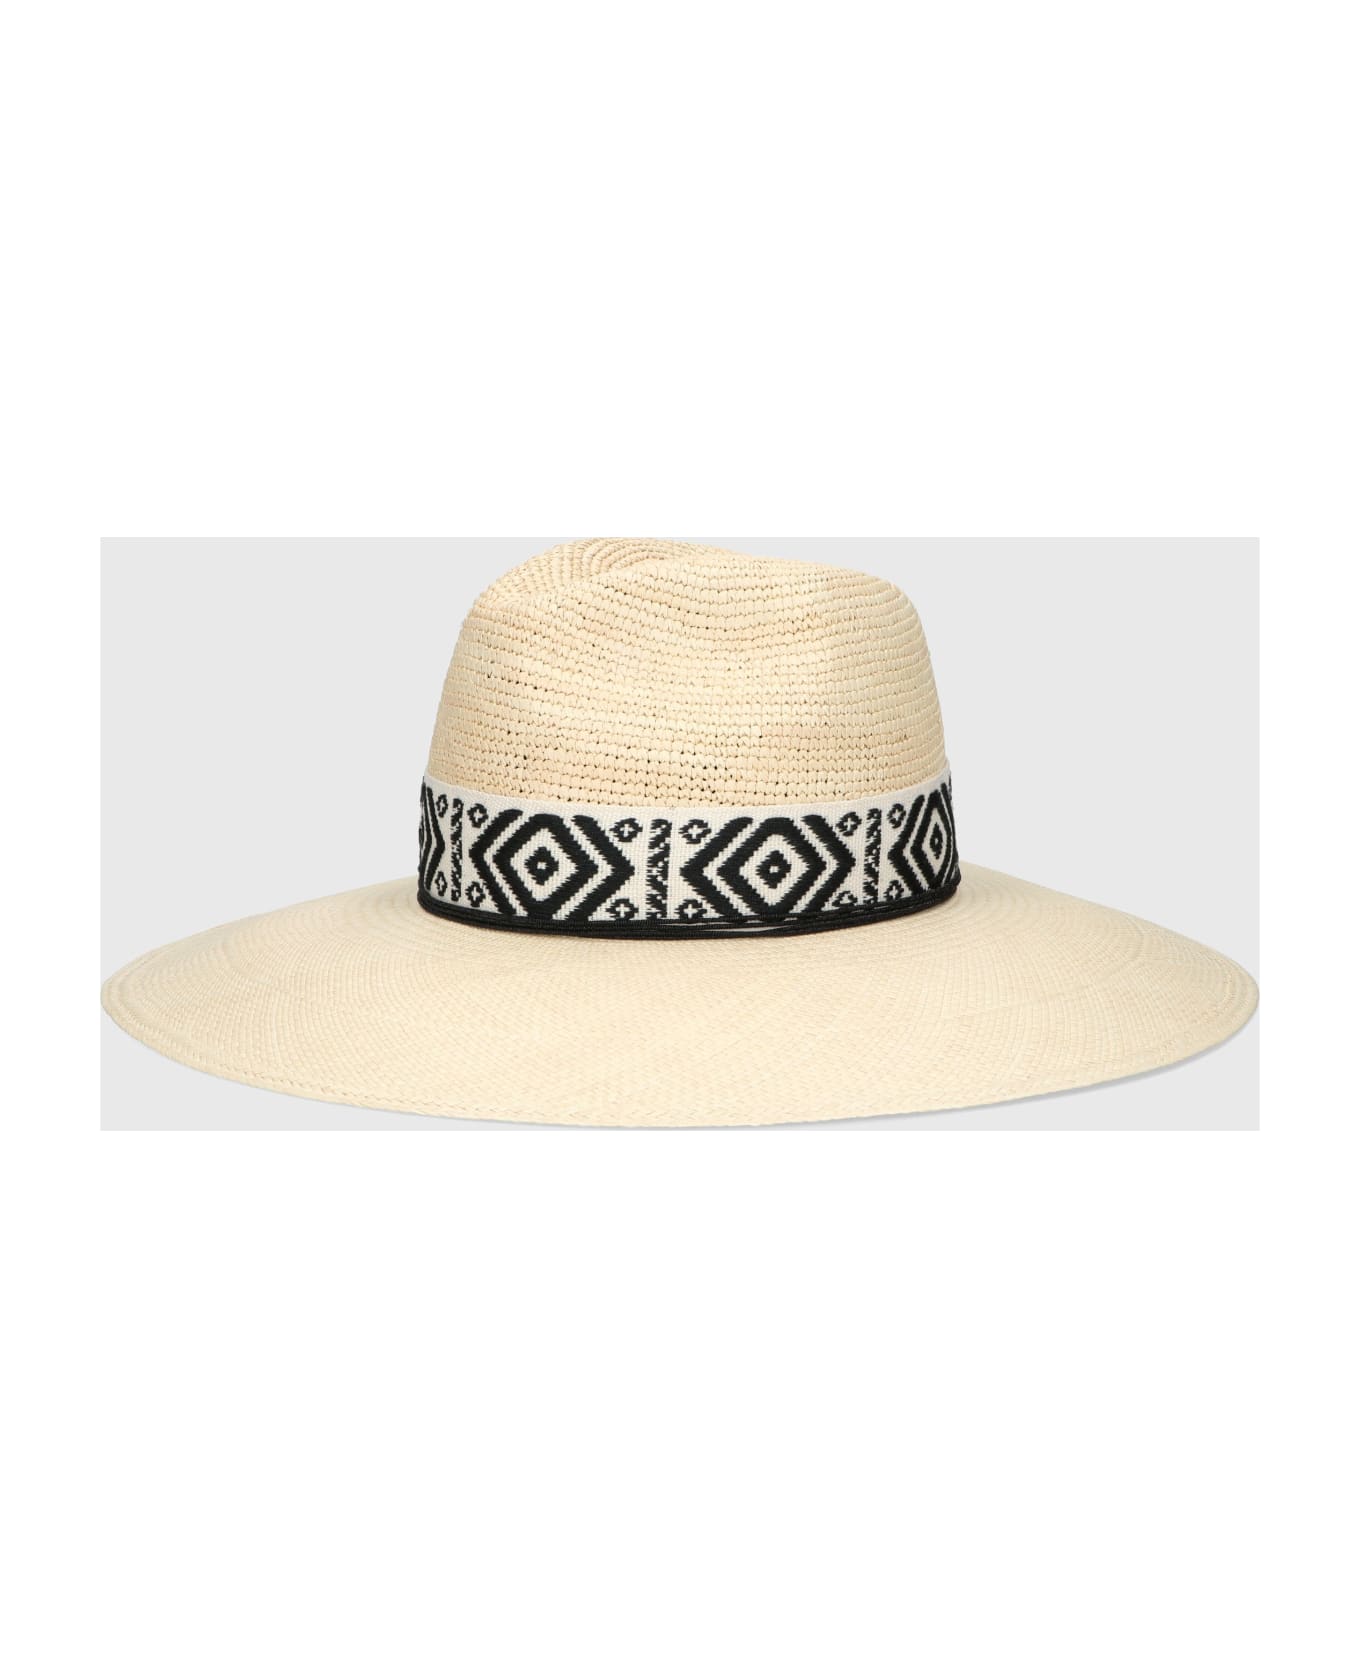 Borsalino Sophie Panama Semicrochet Patterned Hatband - NATURAL, PATTERNED BLACK/CREAM HAT BAND